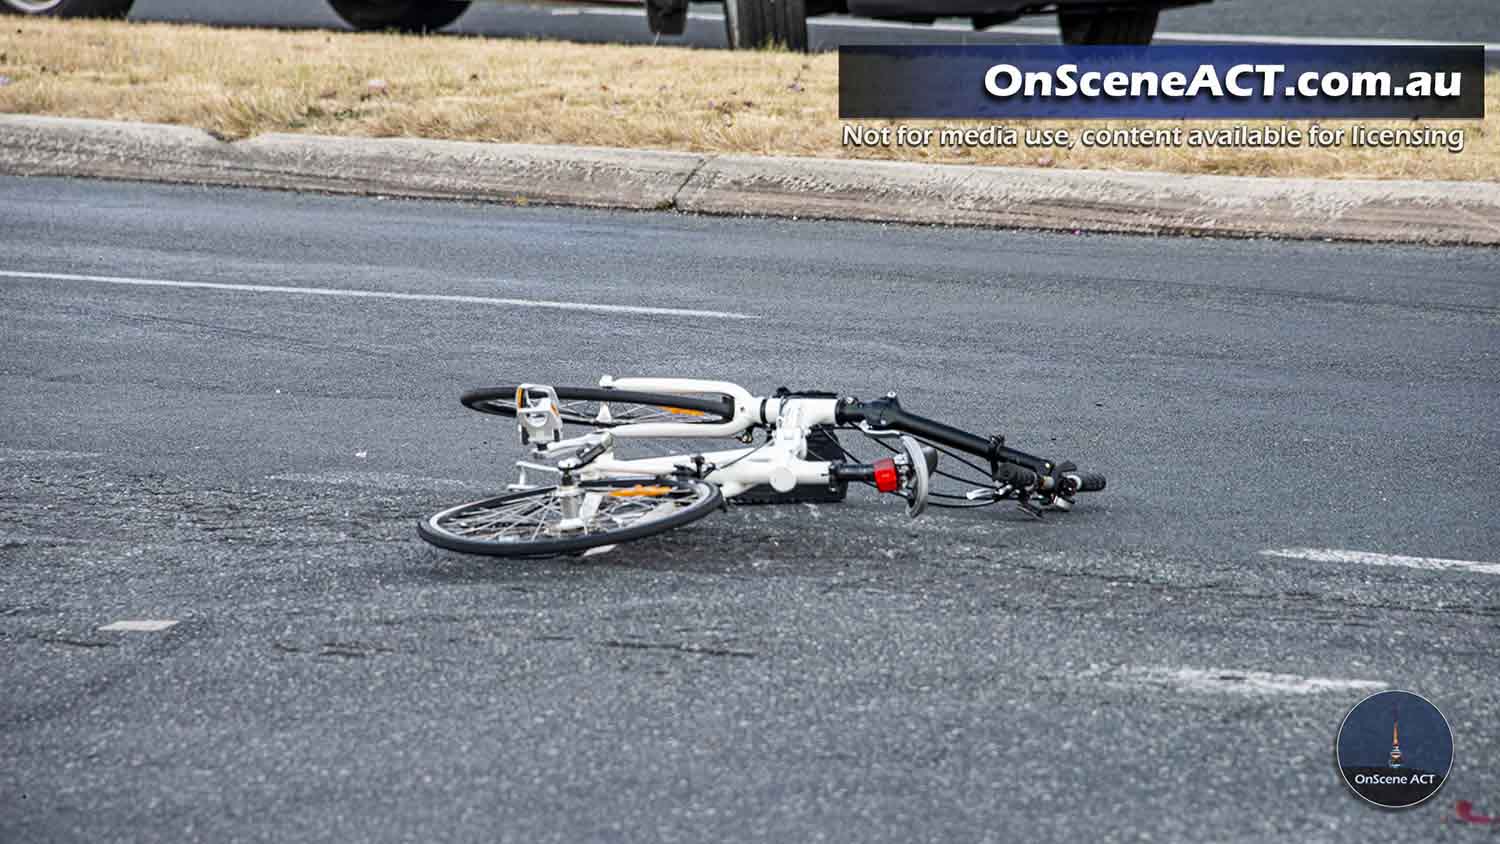 20210427 1700 phillip cyclist crash image 6